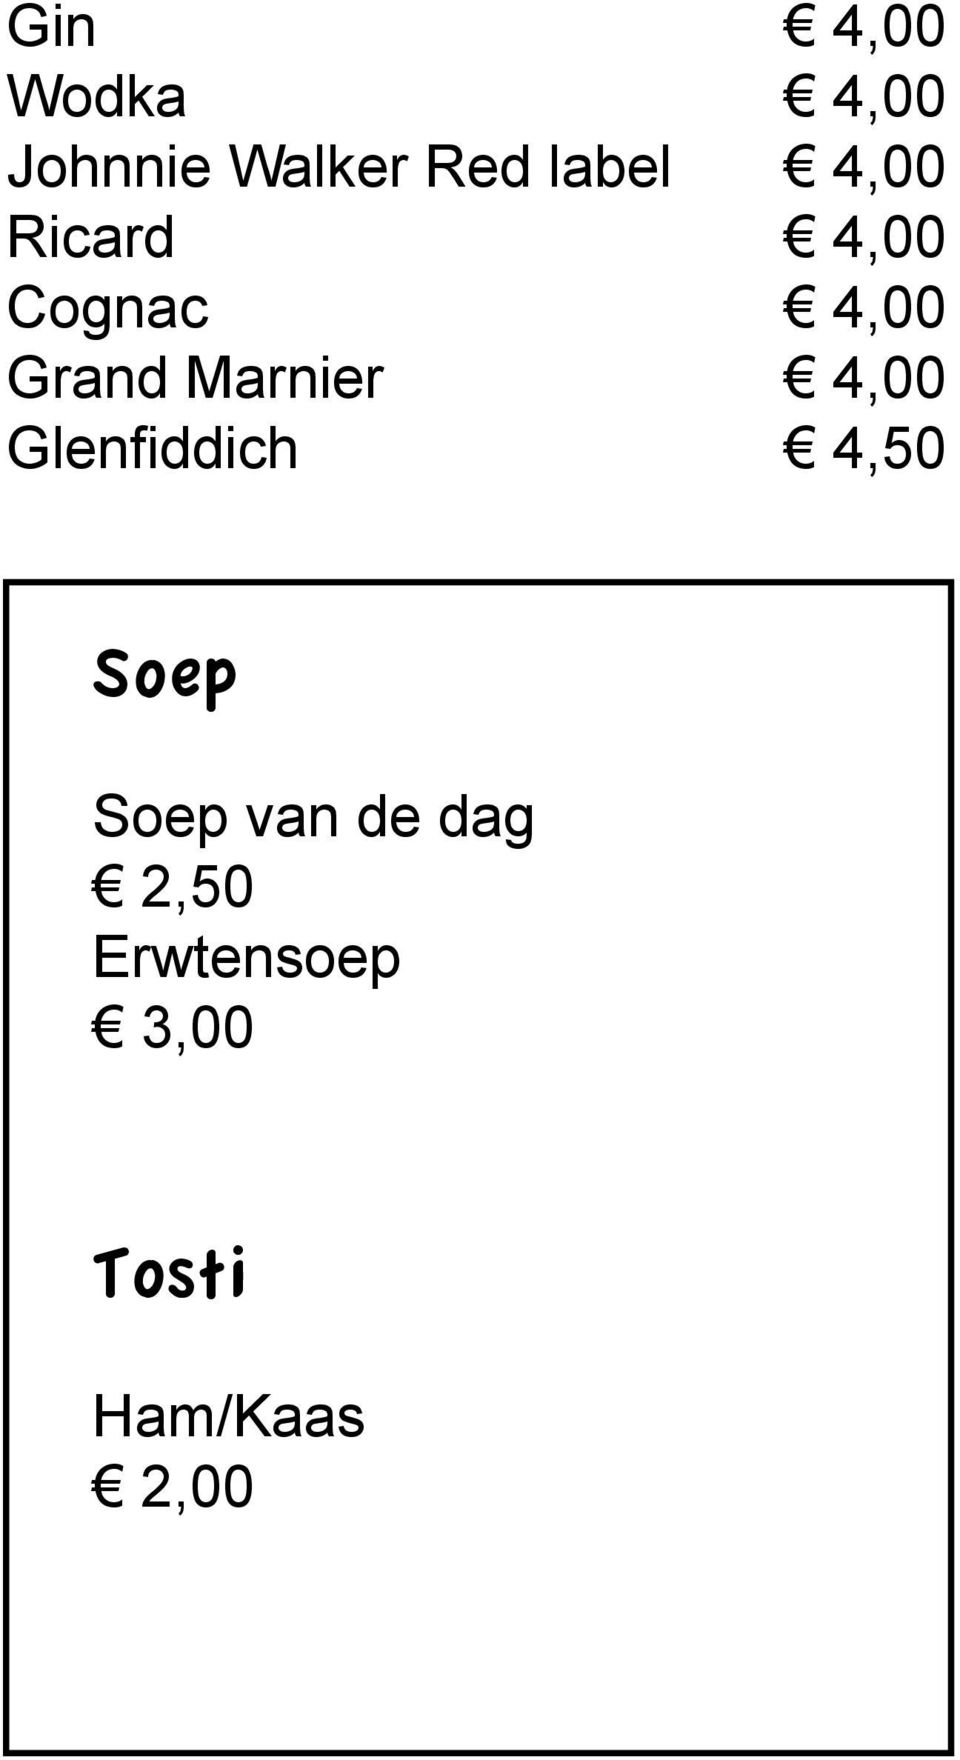 Marnier 4,00 Glenfiddich 4,50 Soep Soep